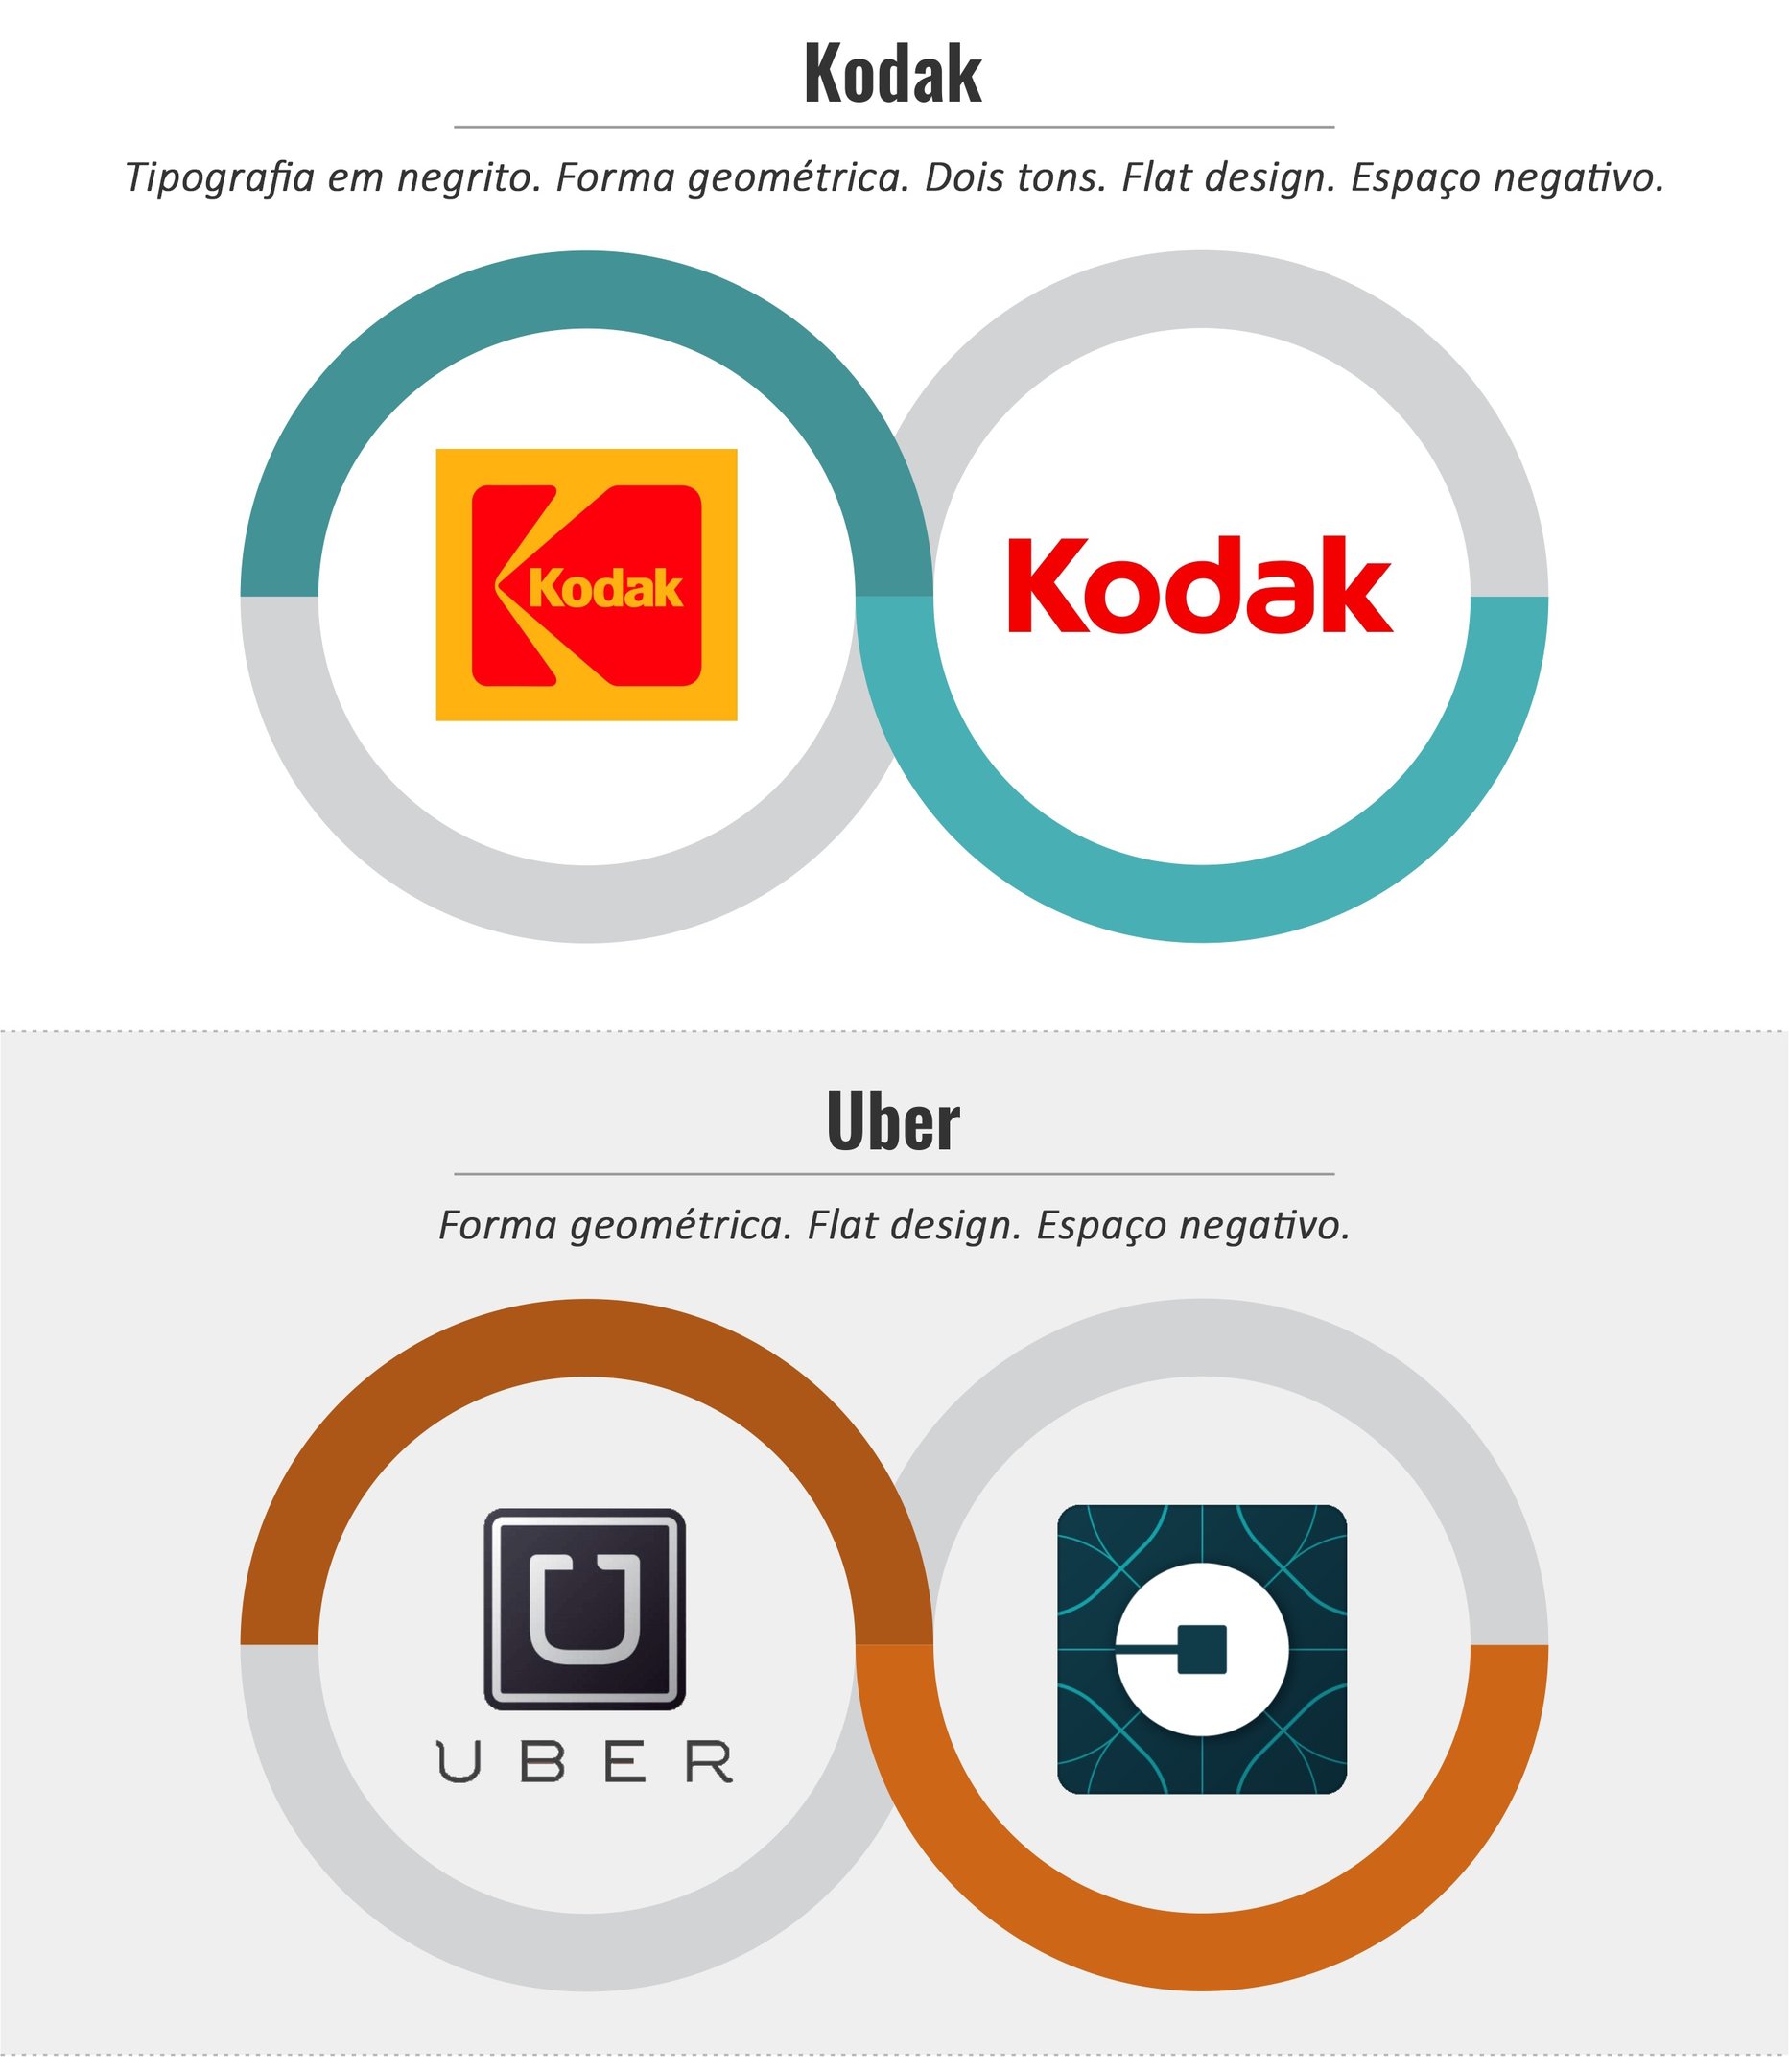 Logos Kodak e Uber